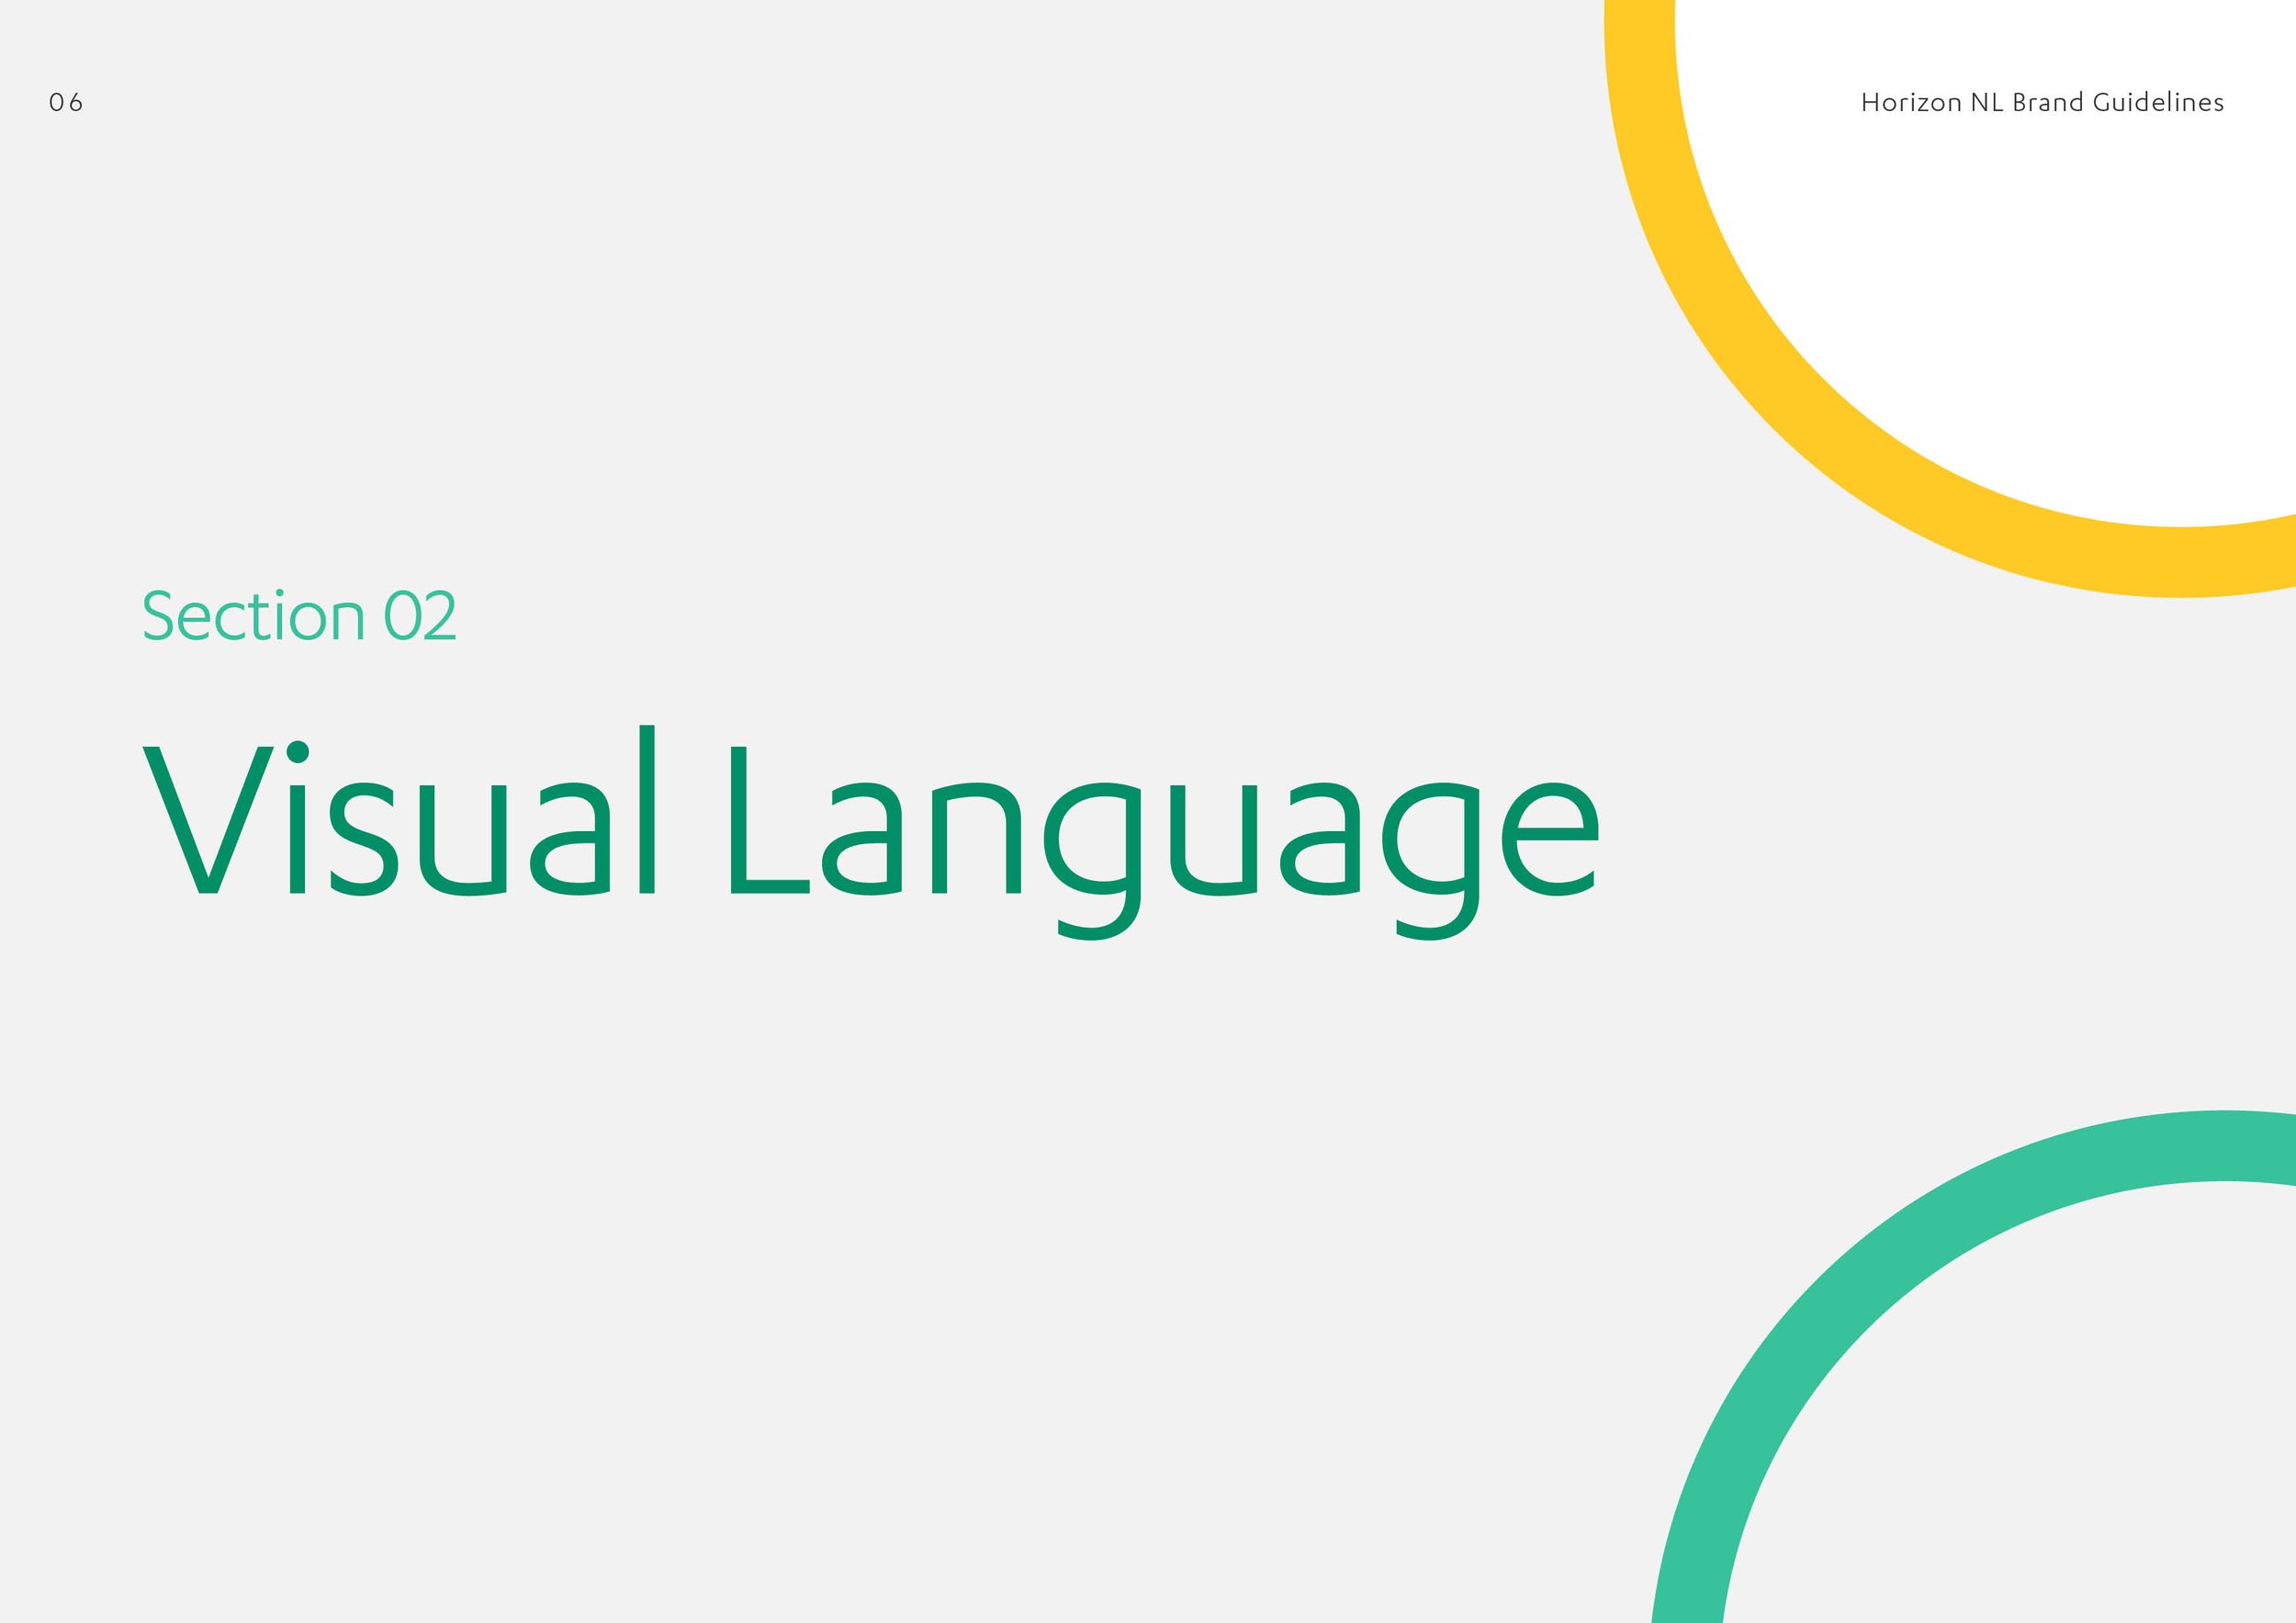 Horizon NL brand guidelines visual language page